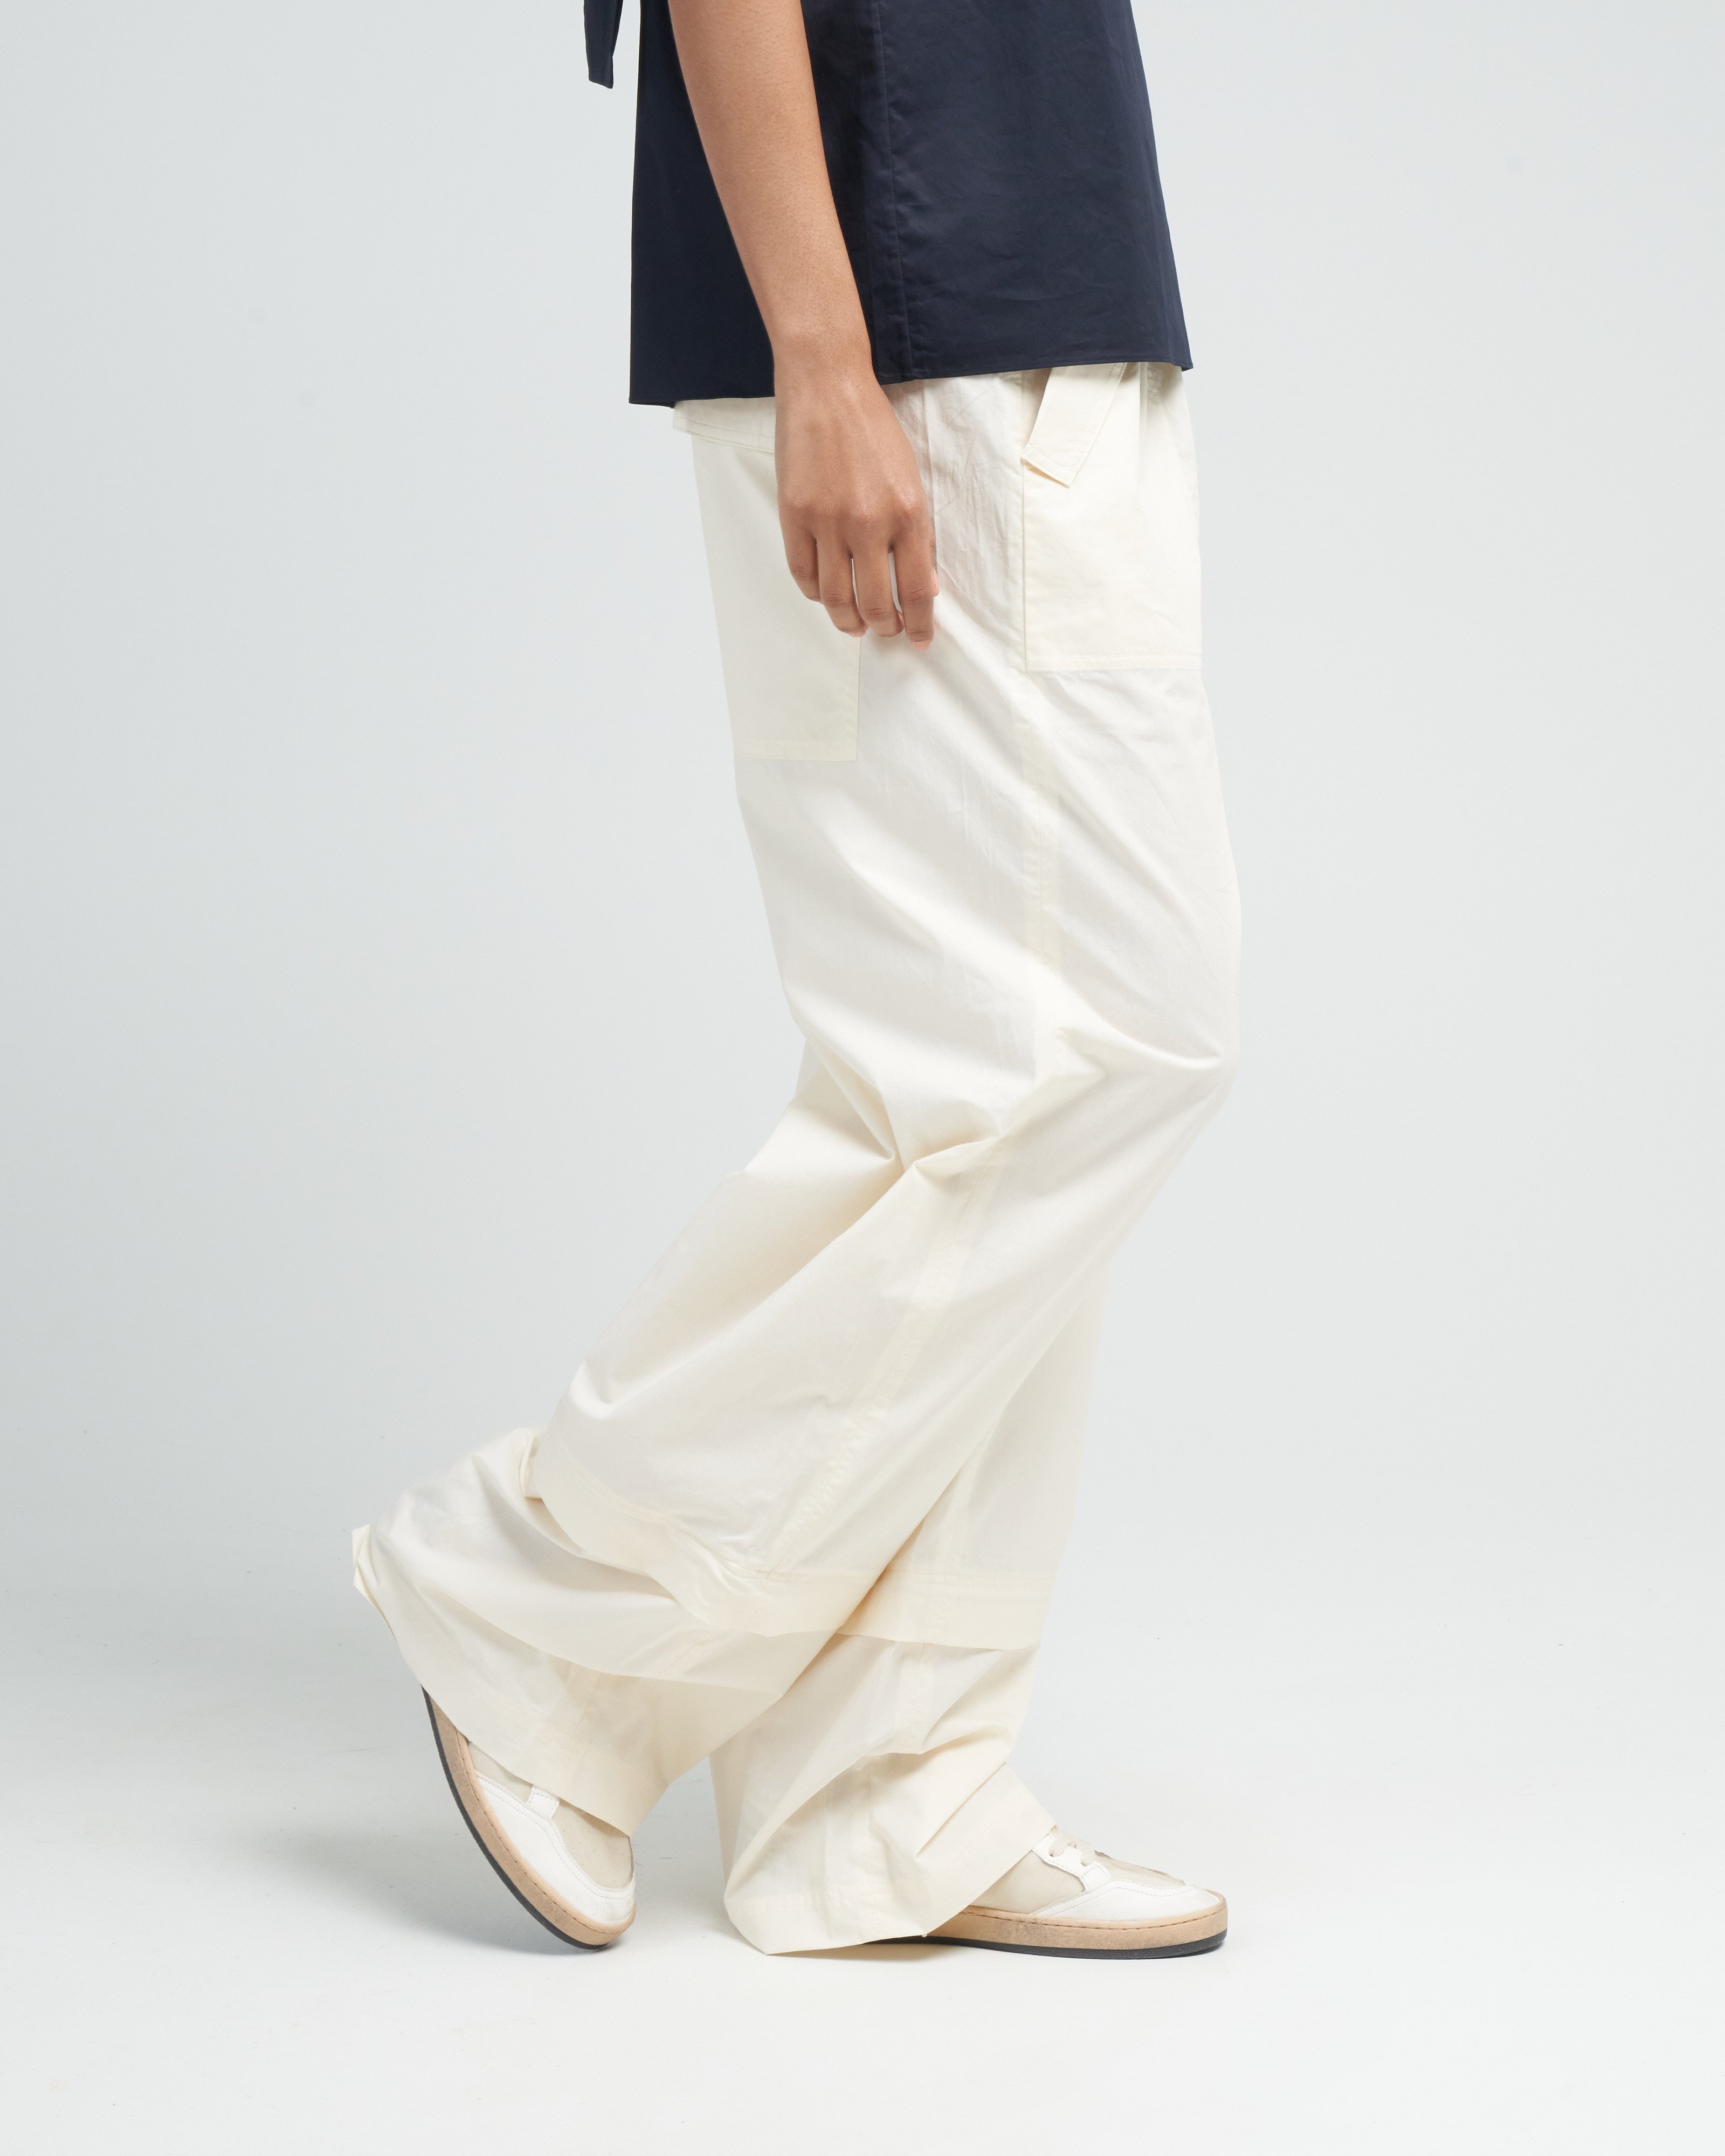 Buy Jersey Women Pants Origami Trousers 4 Way Pants, Women's Wrap Pants,  Wide Pants, Convertible Pants Online in India - Etsy